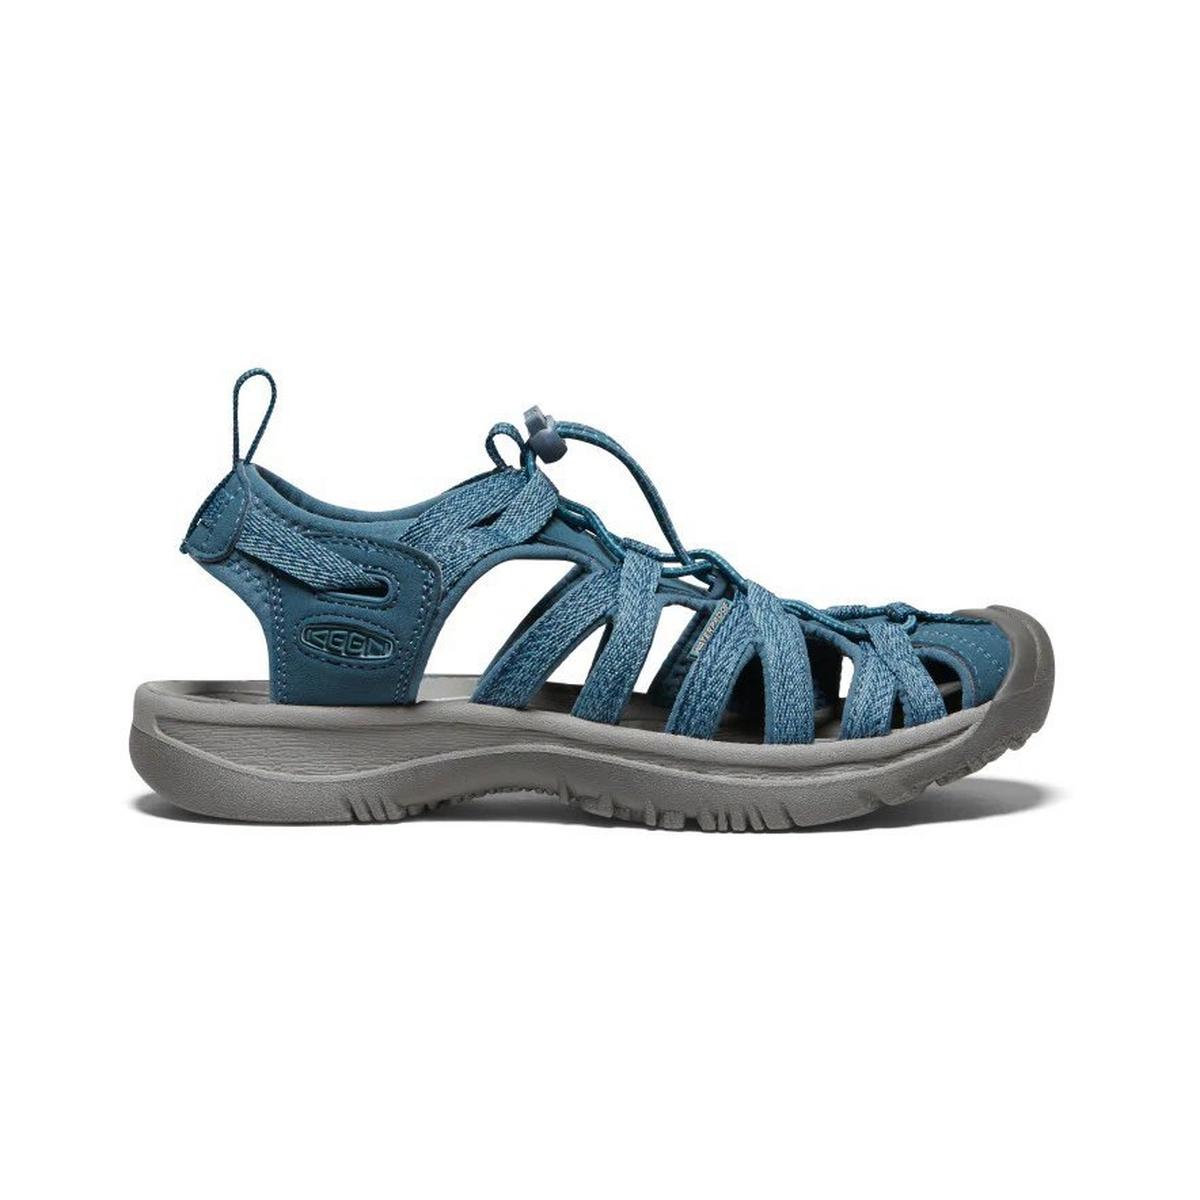 Keen Women's Whisper Sandals - Blue